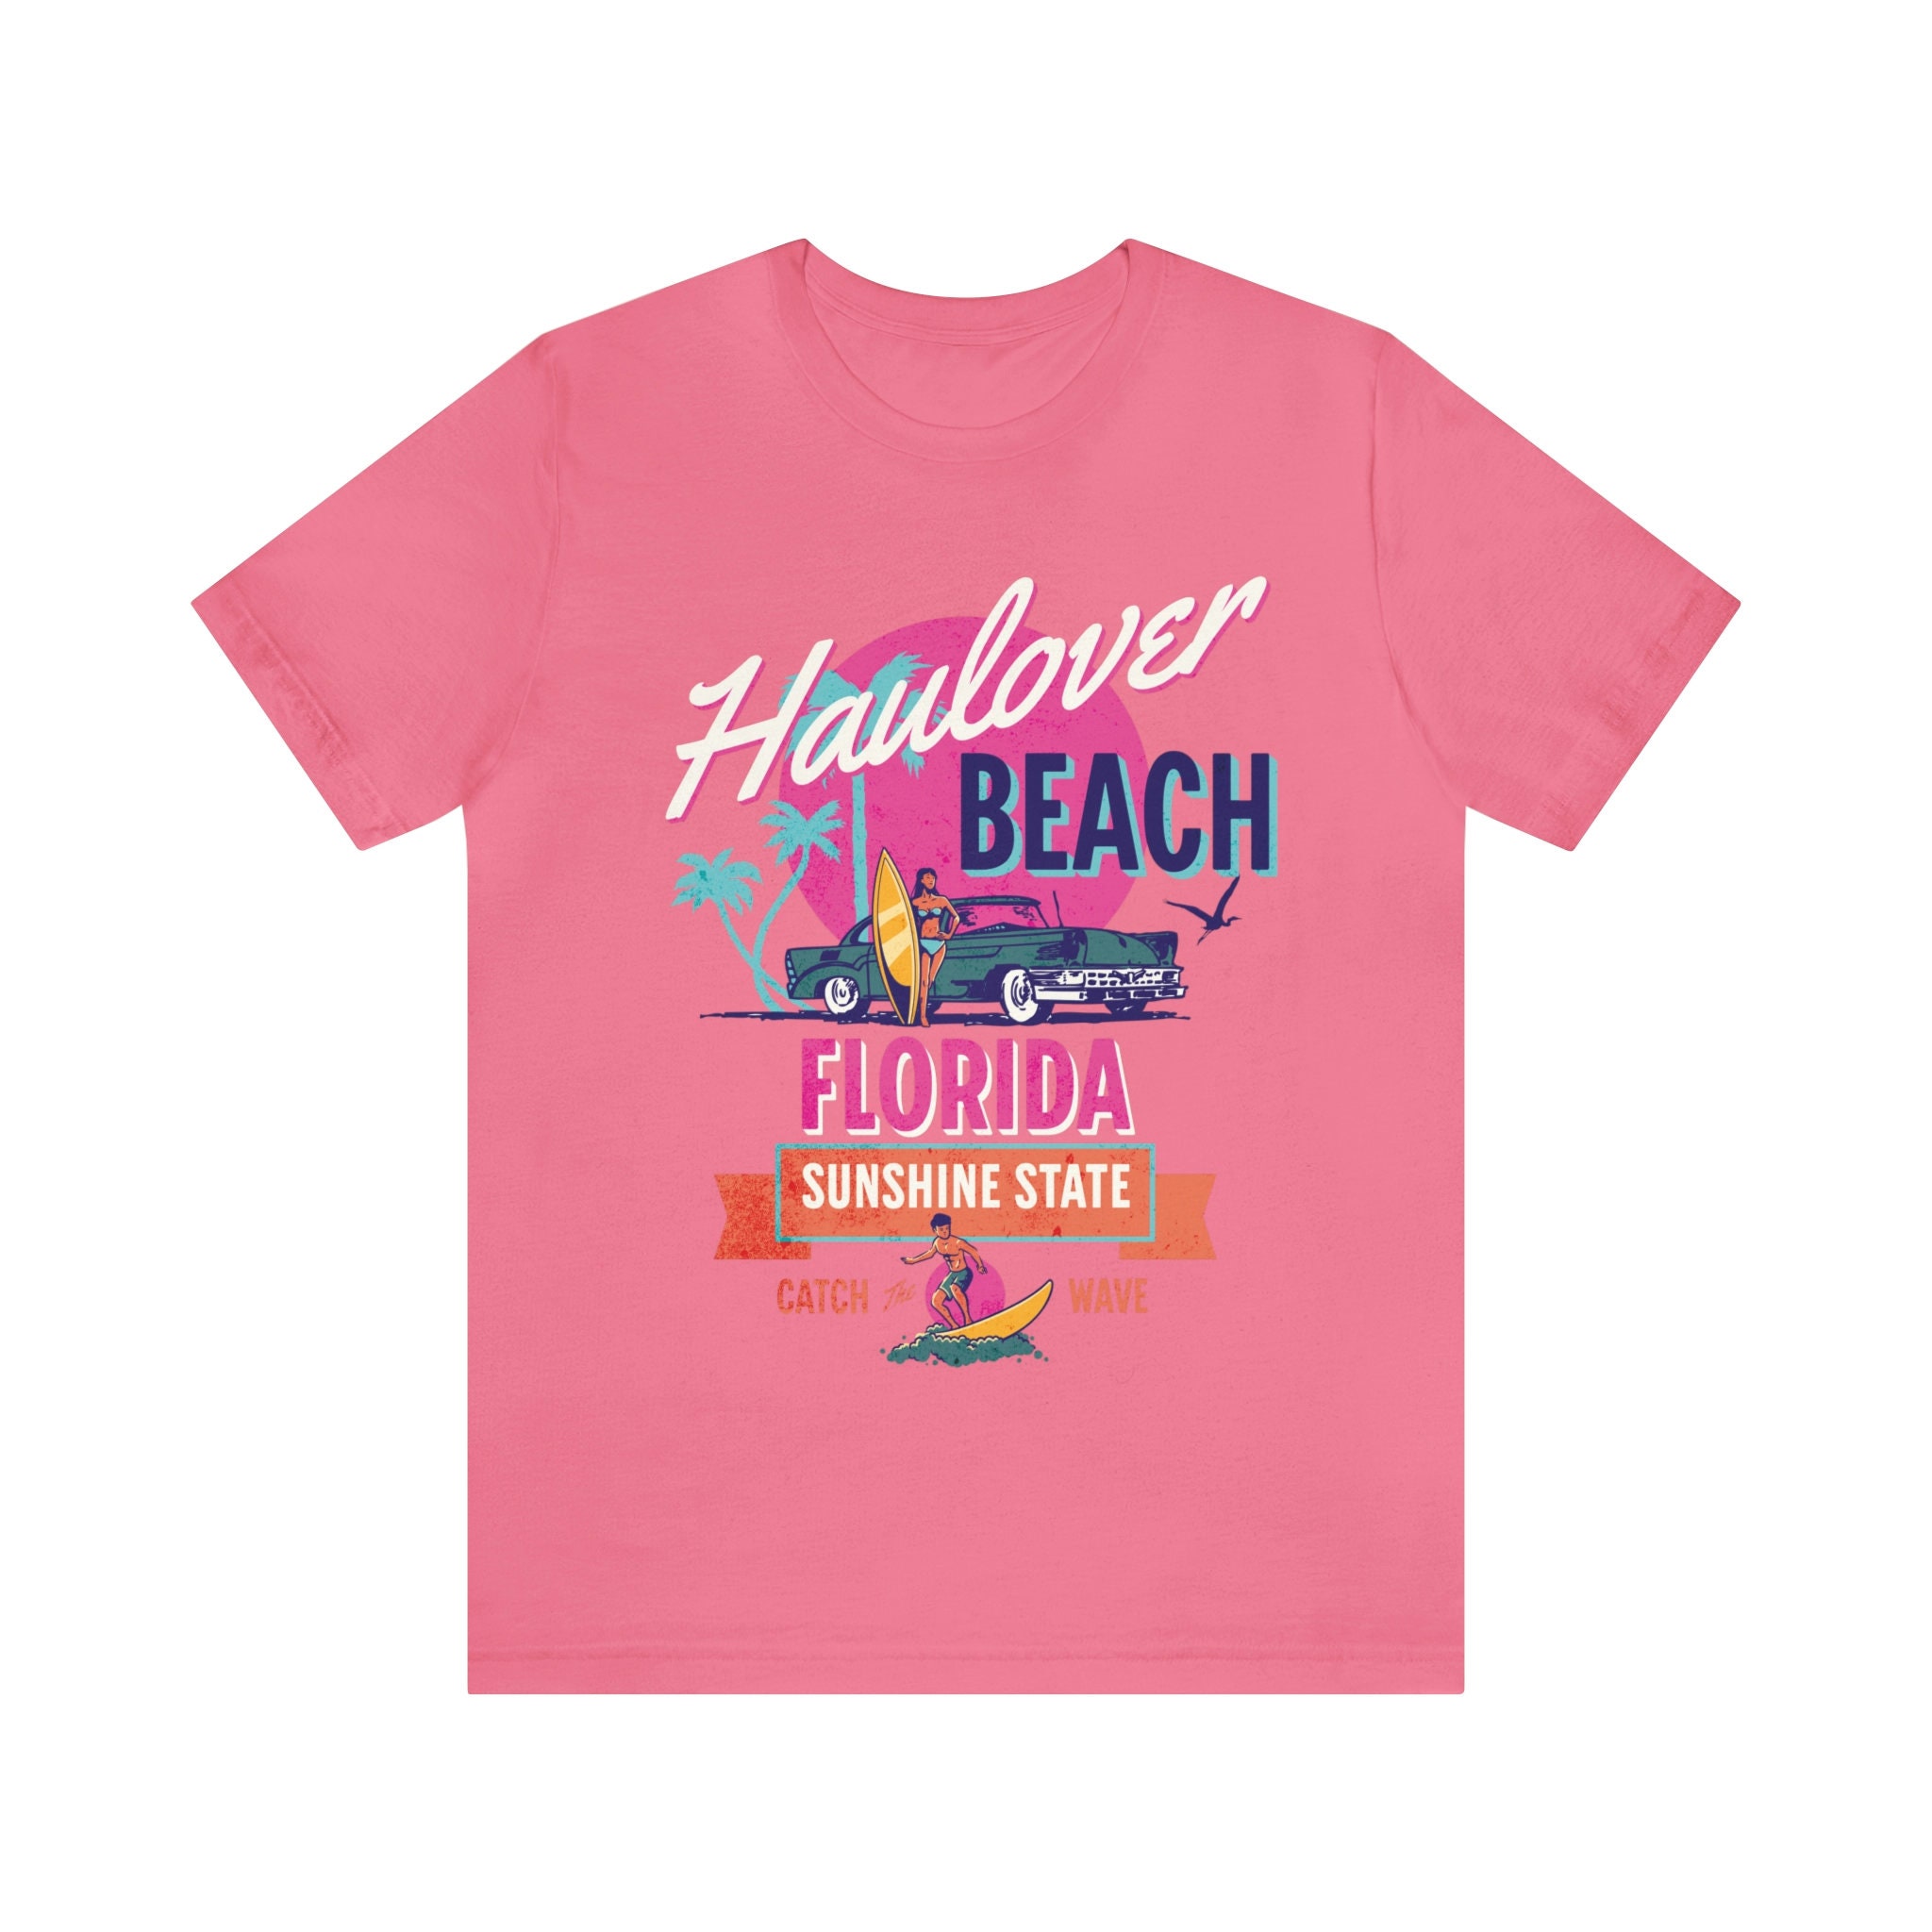 Haulover Beach Florida T-shirt Florida Tshirt Florida image